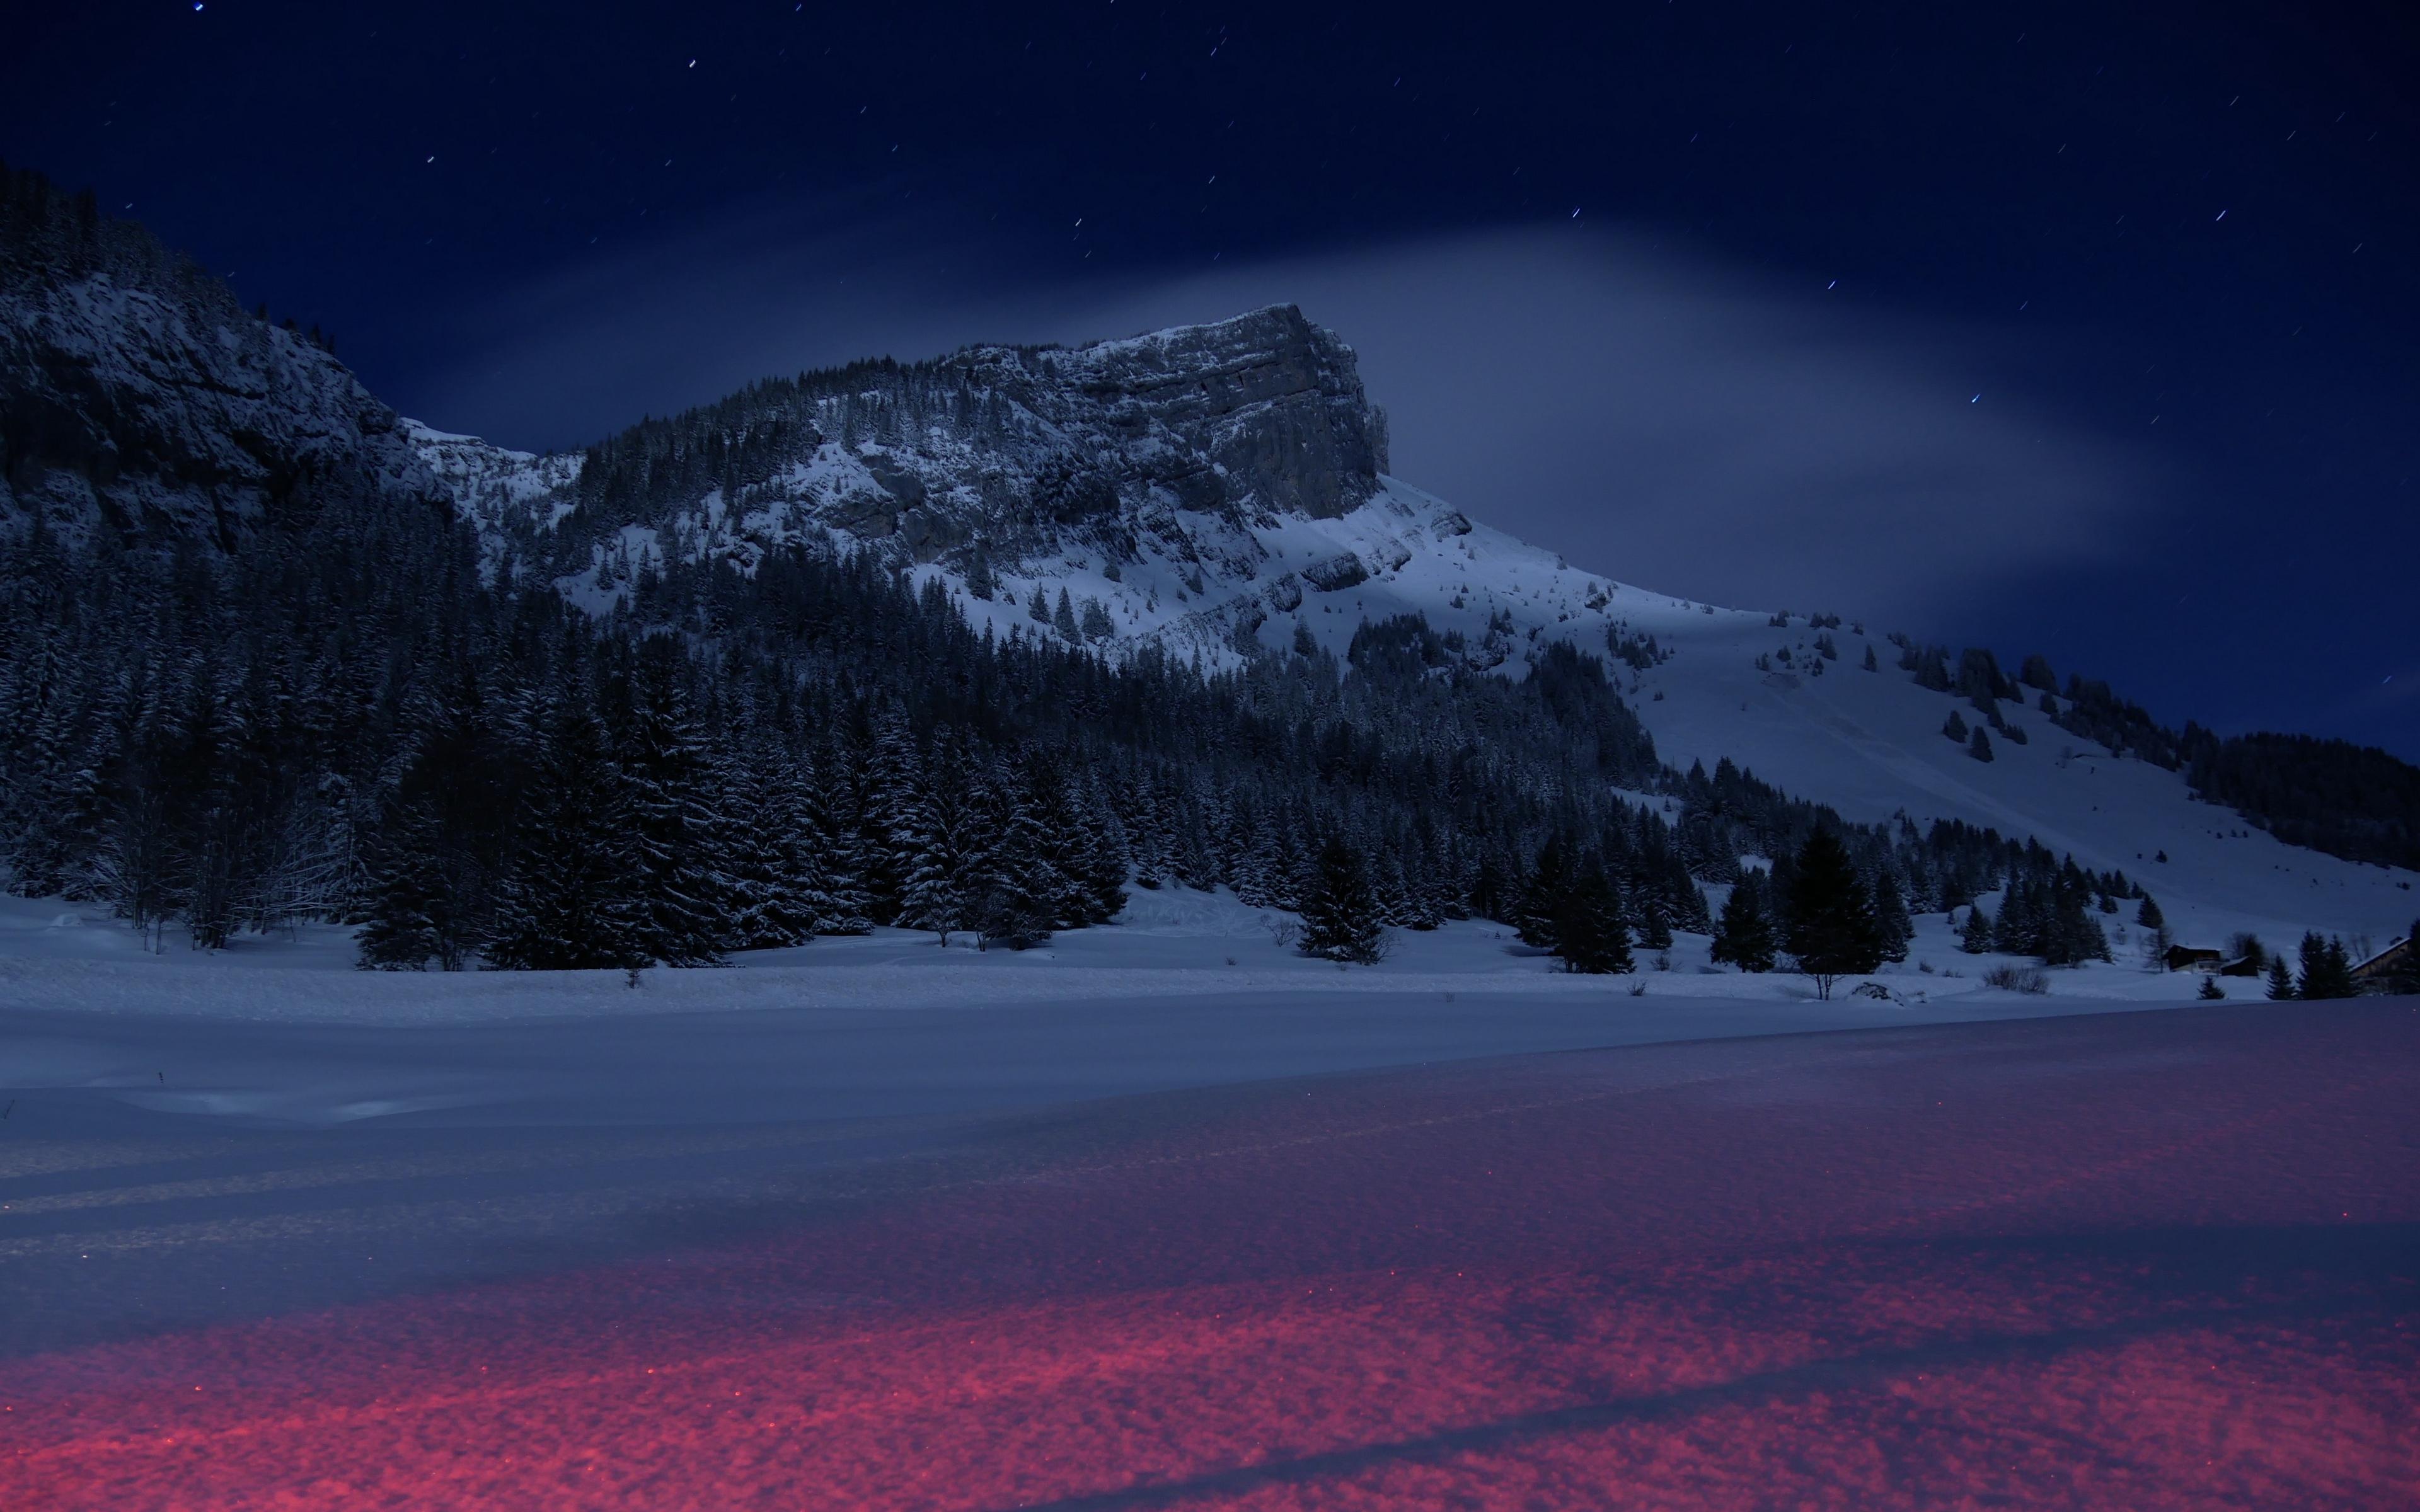 Download wallpaper 3840x2400 mountains, night, winter, snow